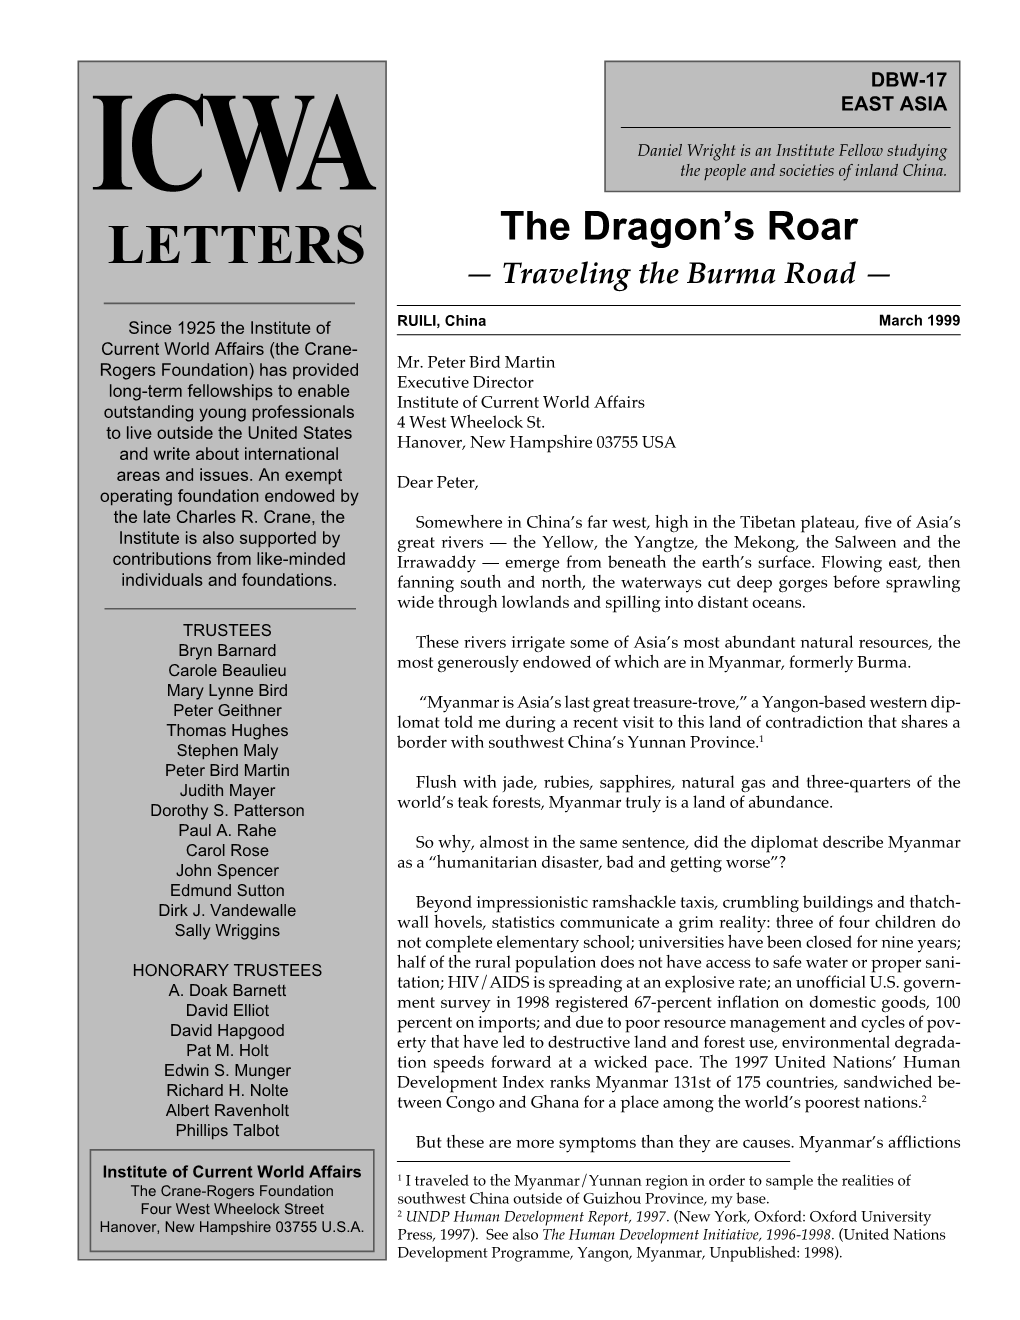 The Dragon's Roar: Traveling the Burma Road